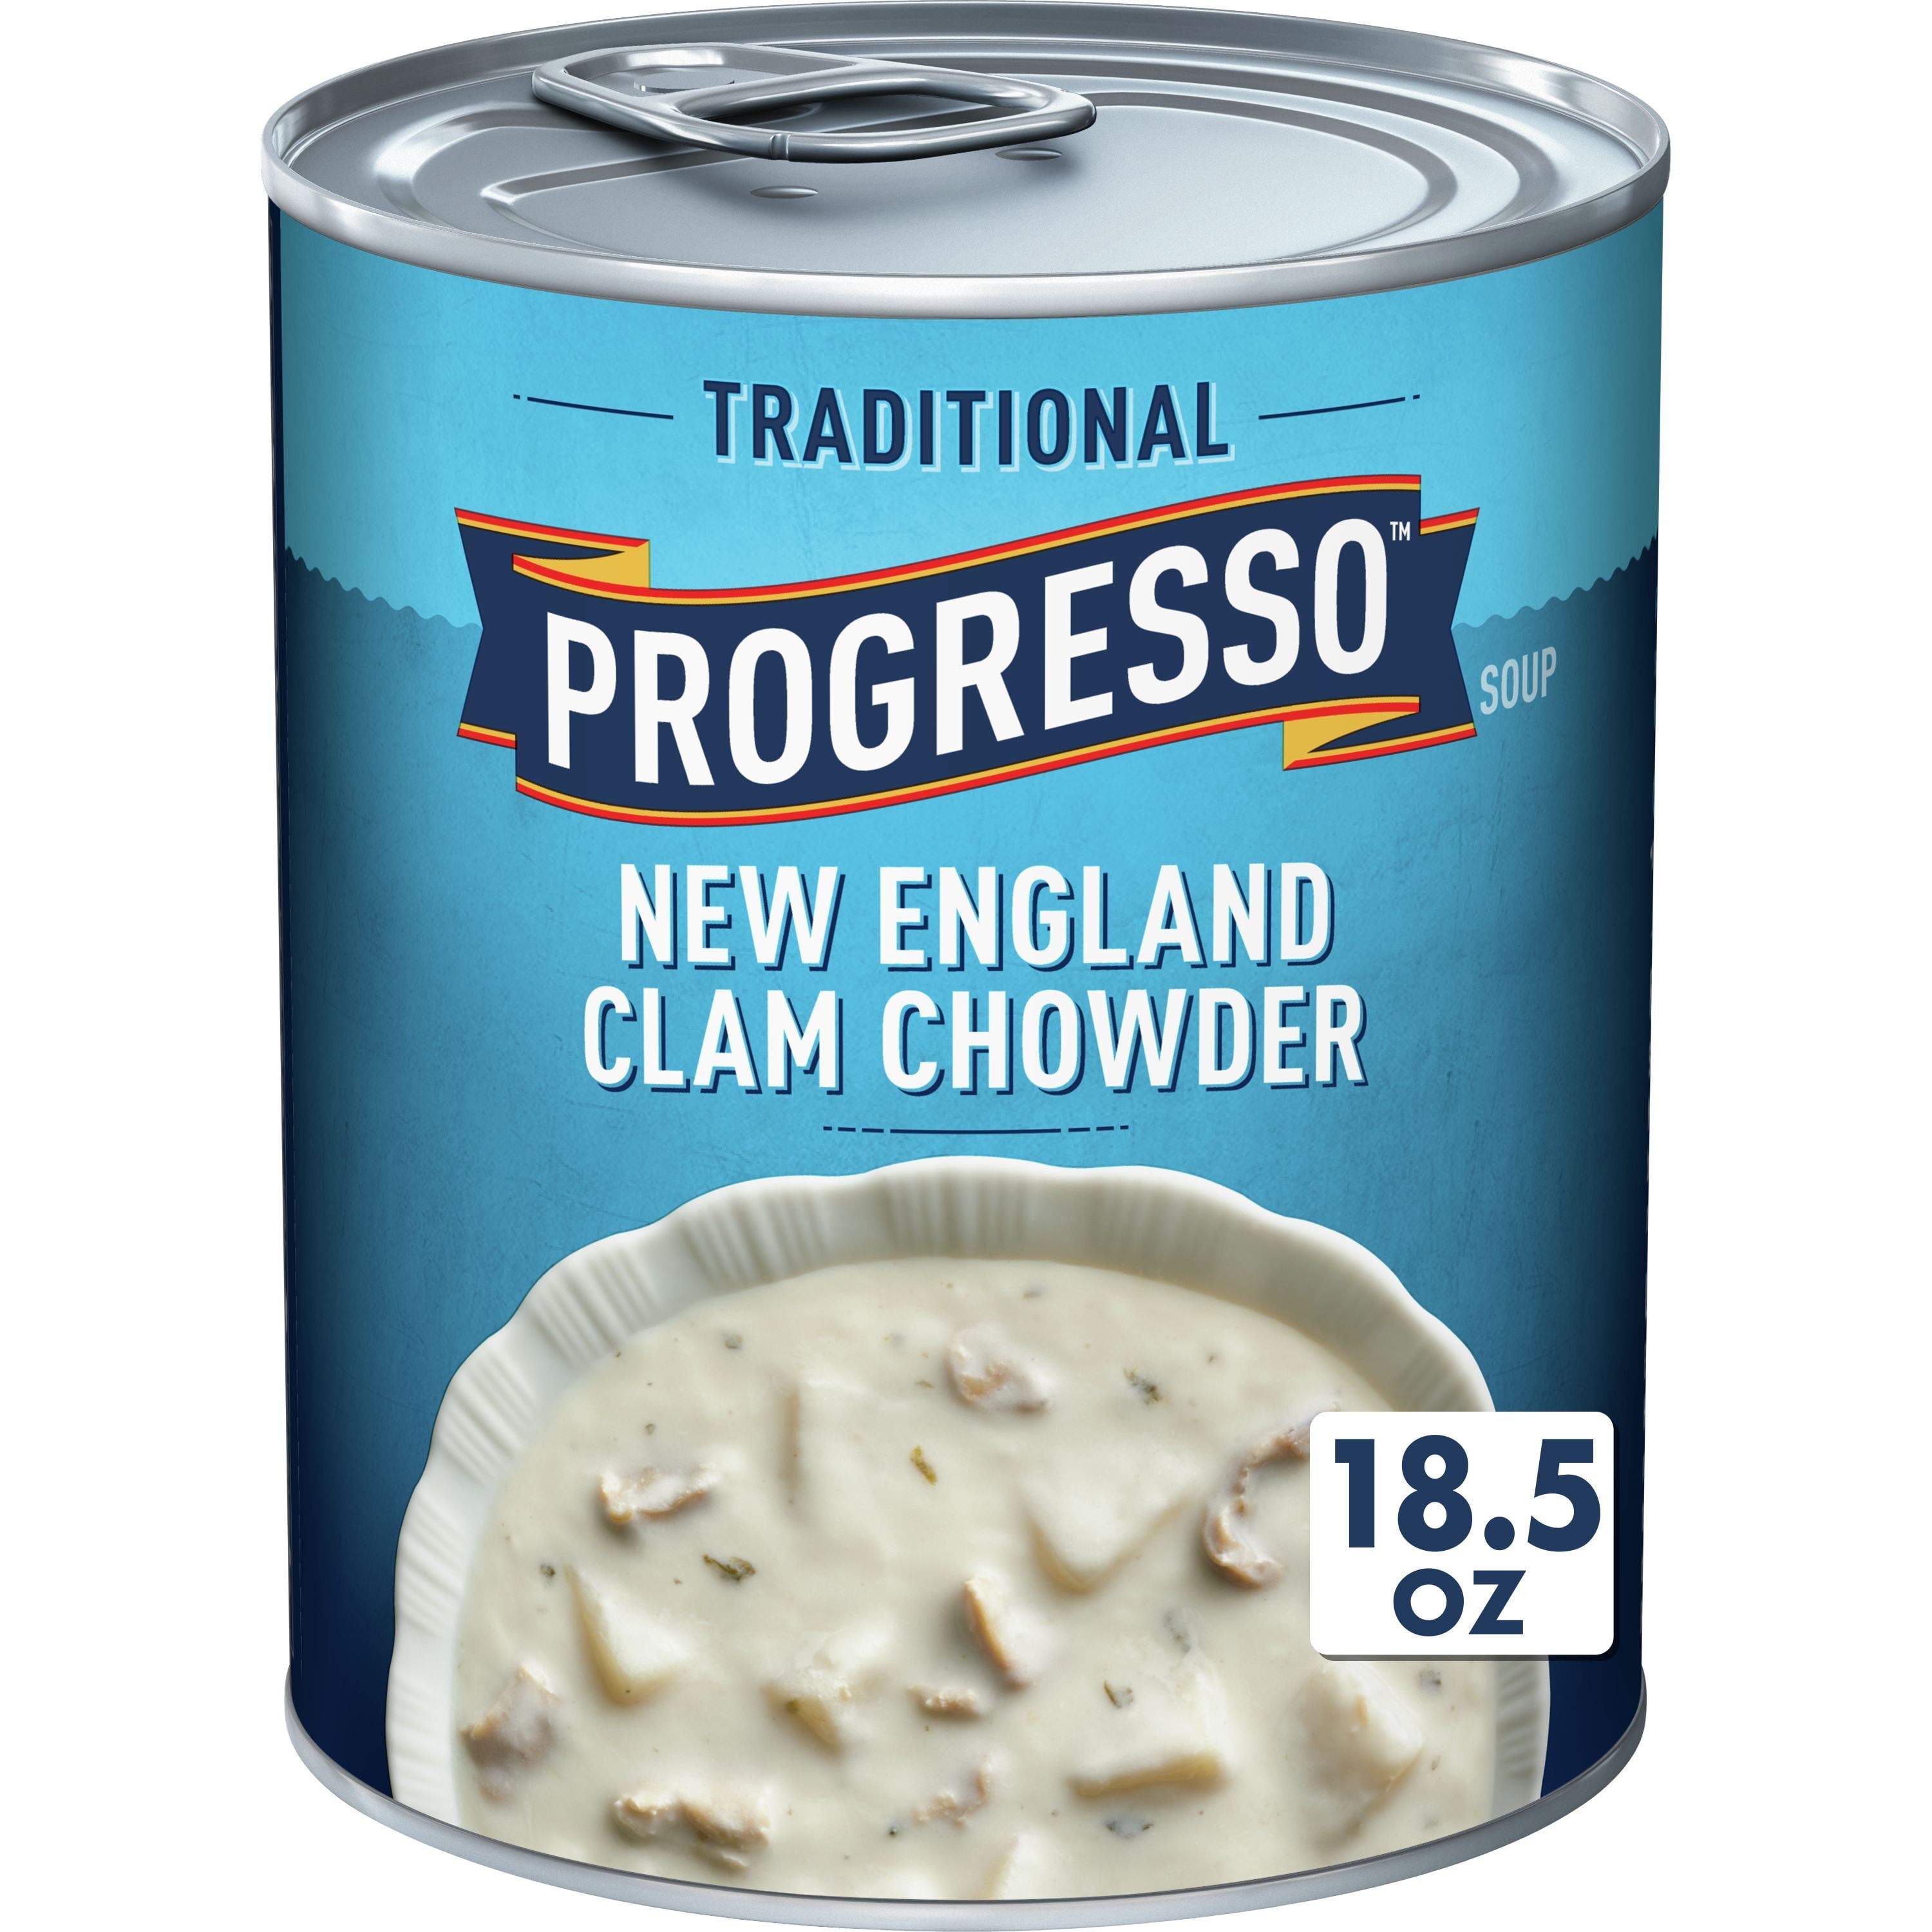 Progresso Traditional, New England Clam Chowder Soup, Gluten Free, 18.5 oz.